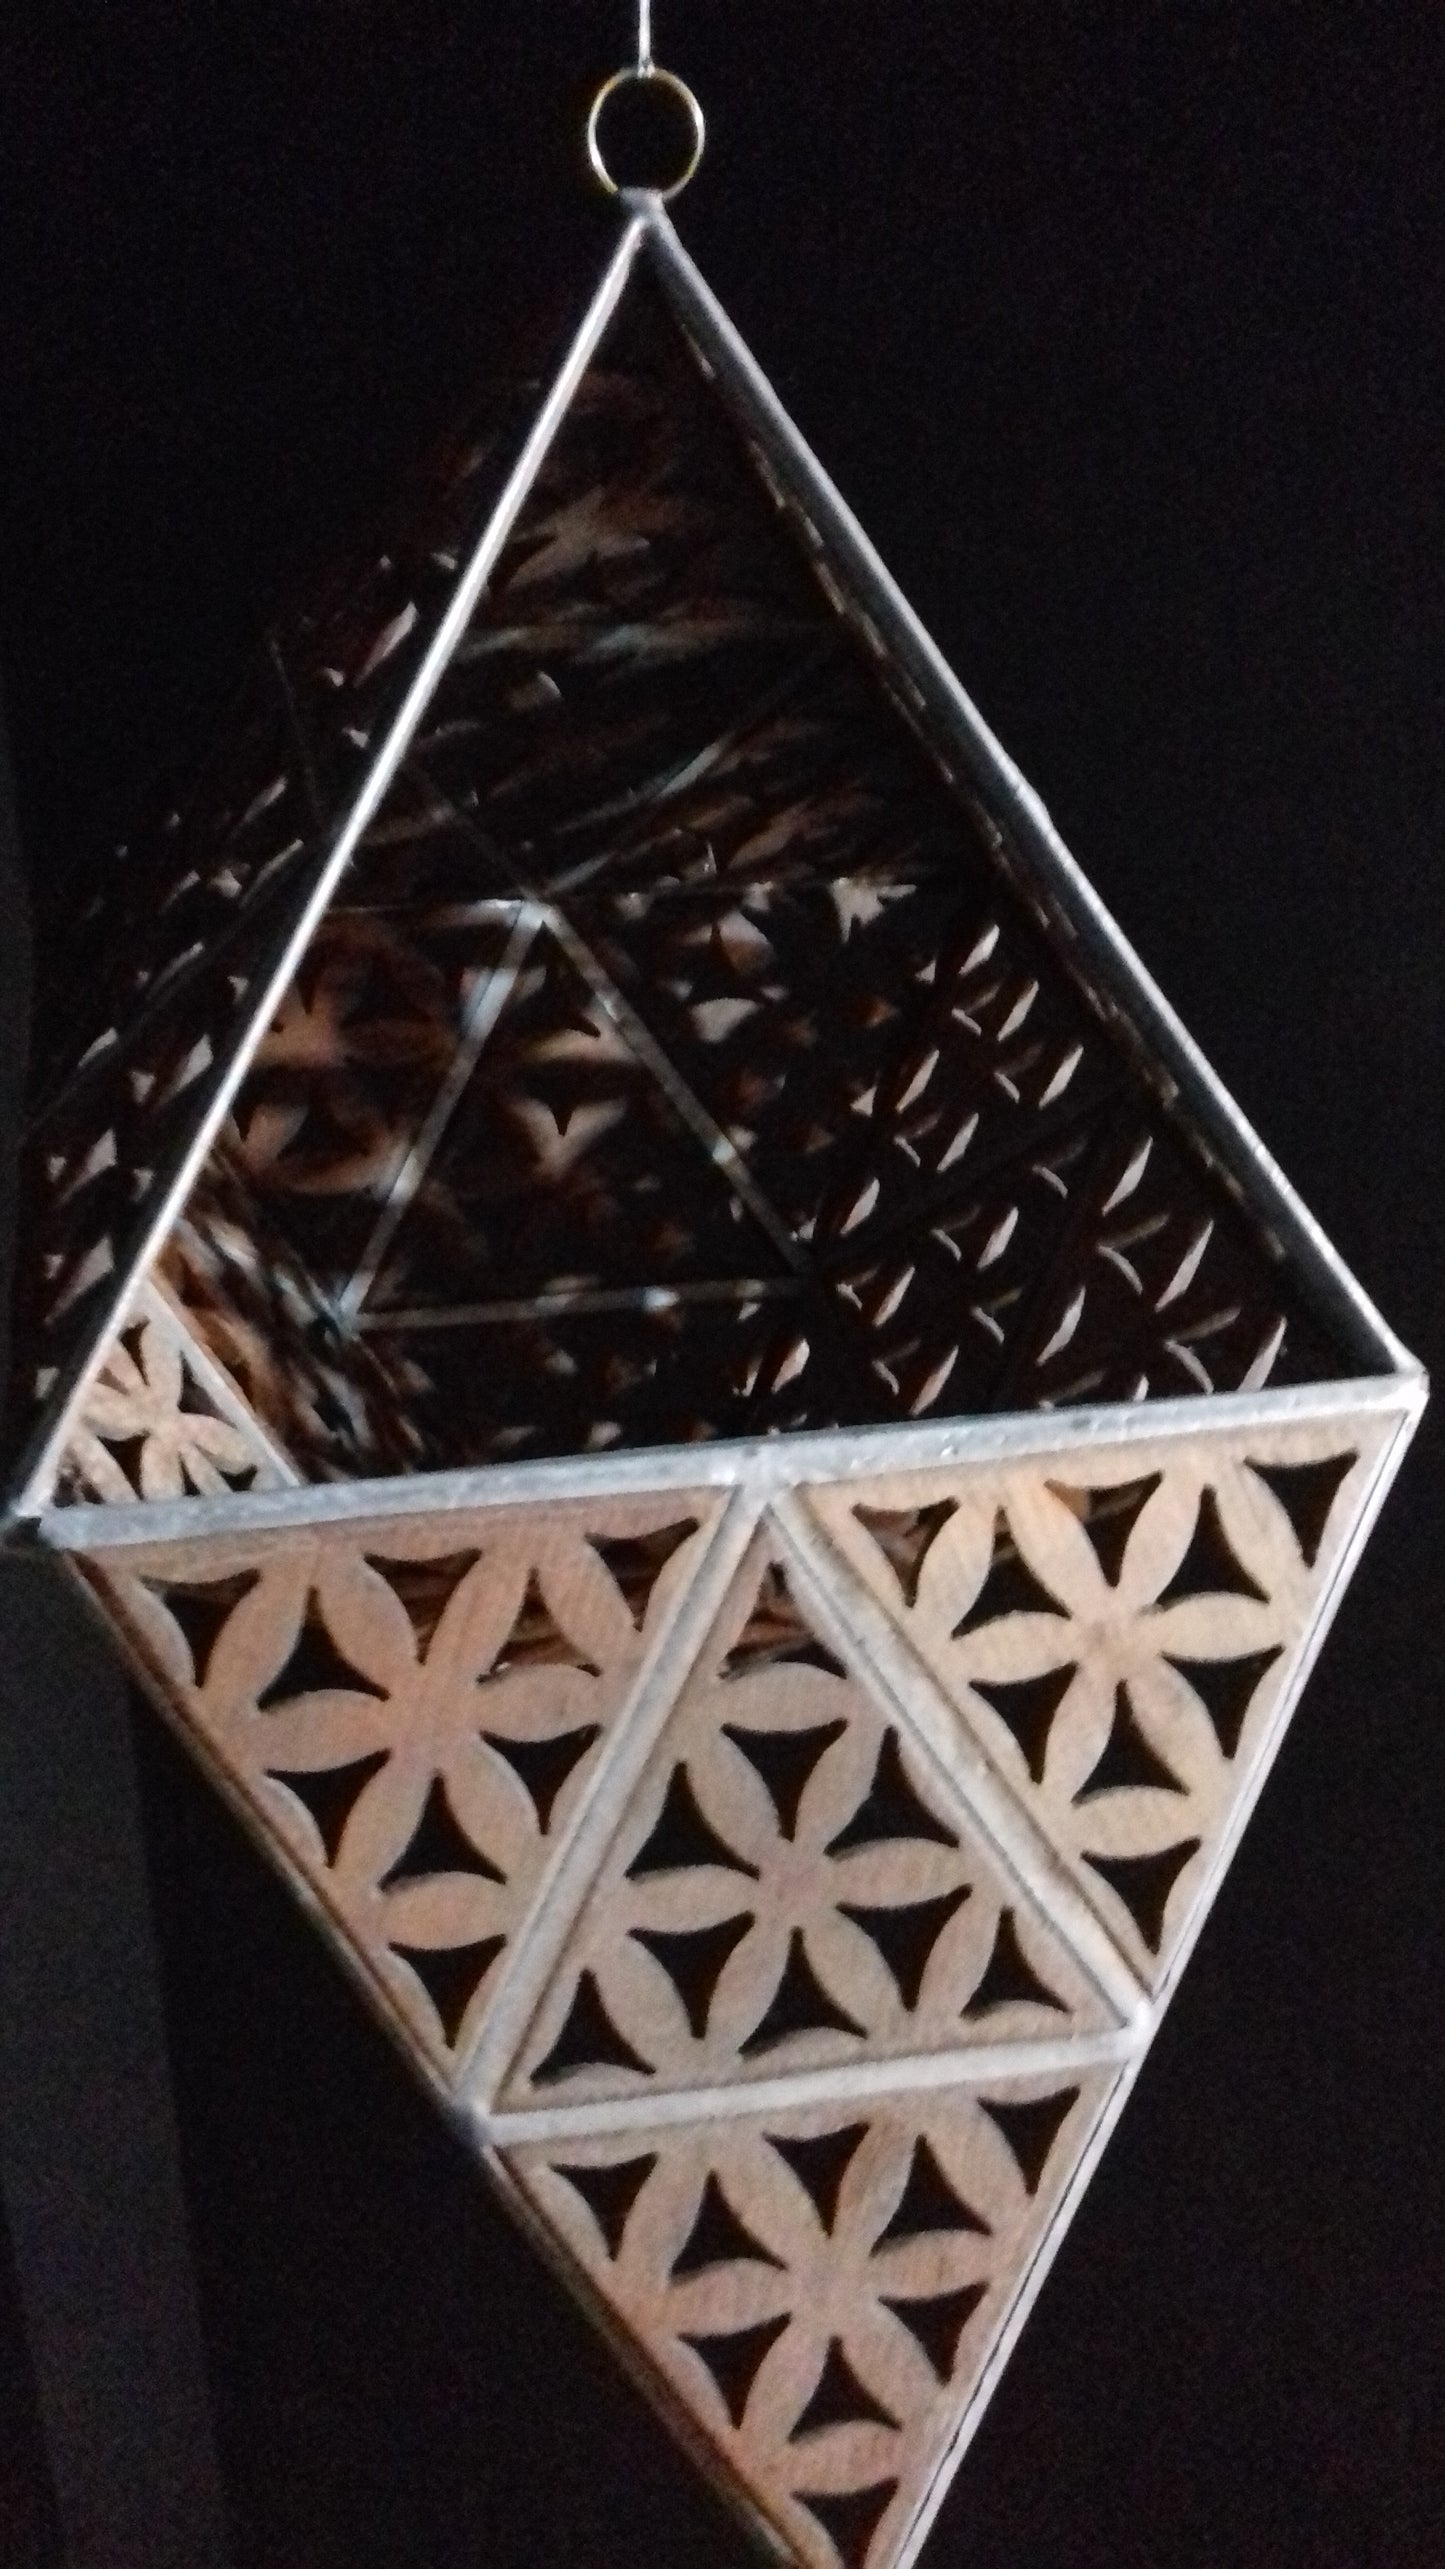 Ref.ST0021 - Prana Sphere with Creation Mandala pattern lamp